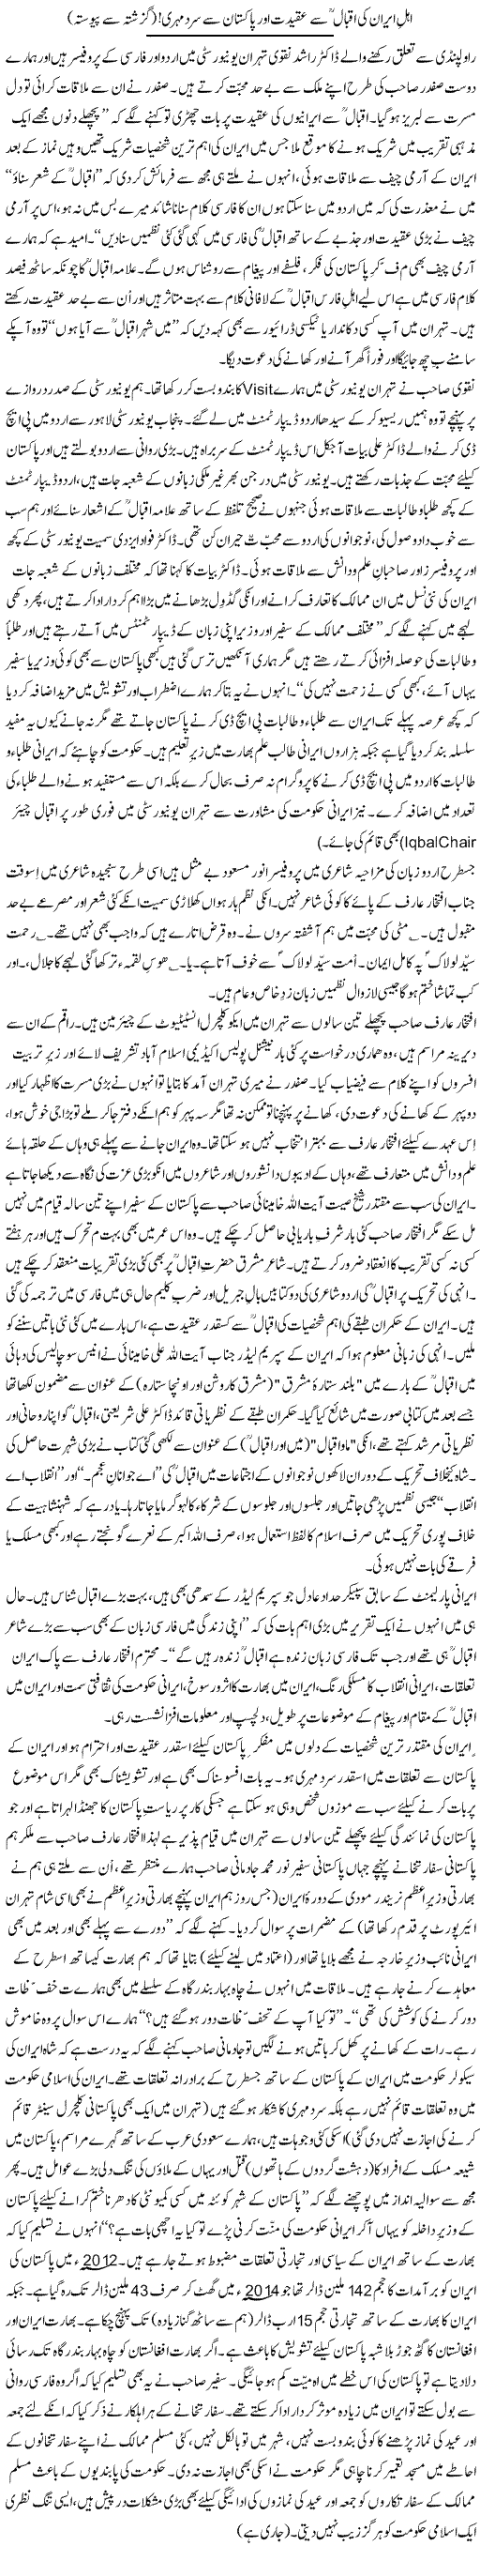 Ahal Iran Ki Iqbal Se Aqeedat Air Pakistan Se Sard Mehri | Zulfiqar Ahmed Cheema | Daily Urdu Columns